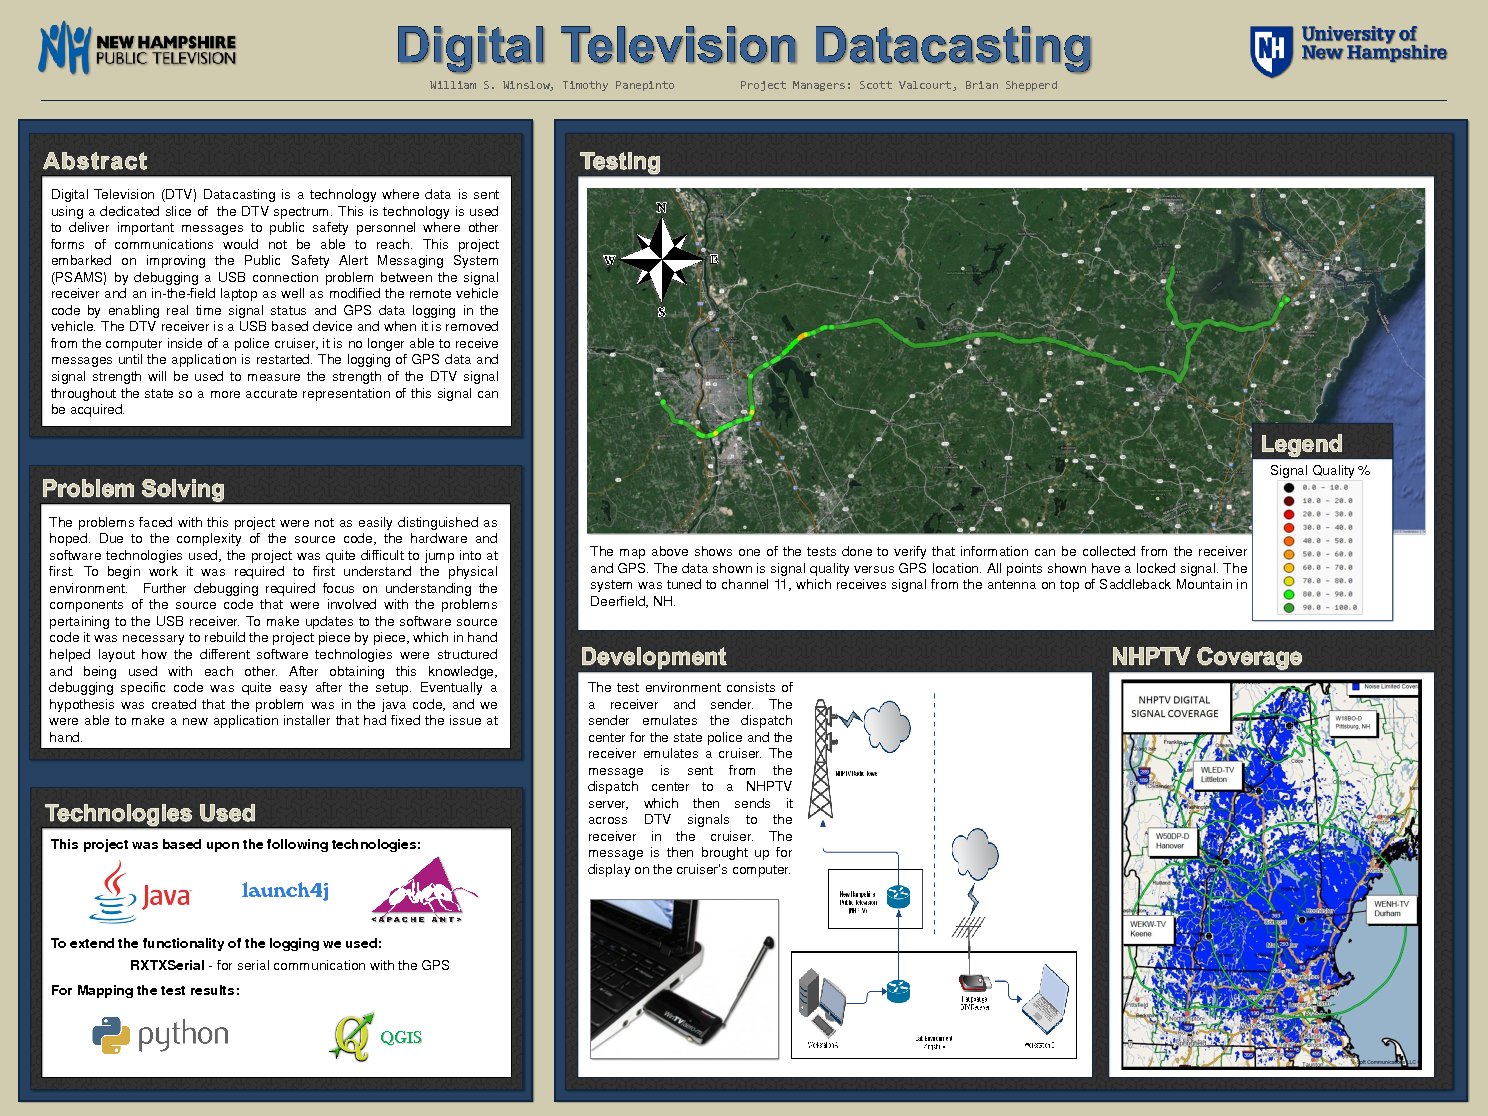 Digital Television Datacasting by wsk5